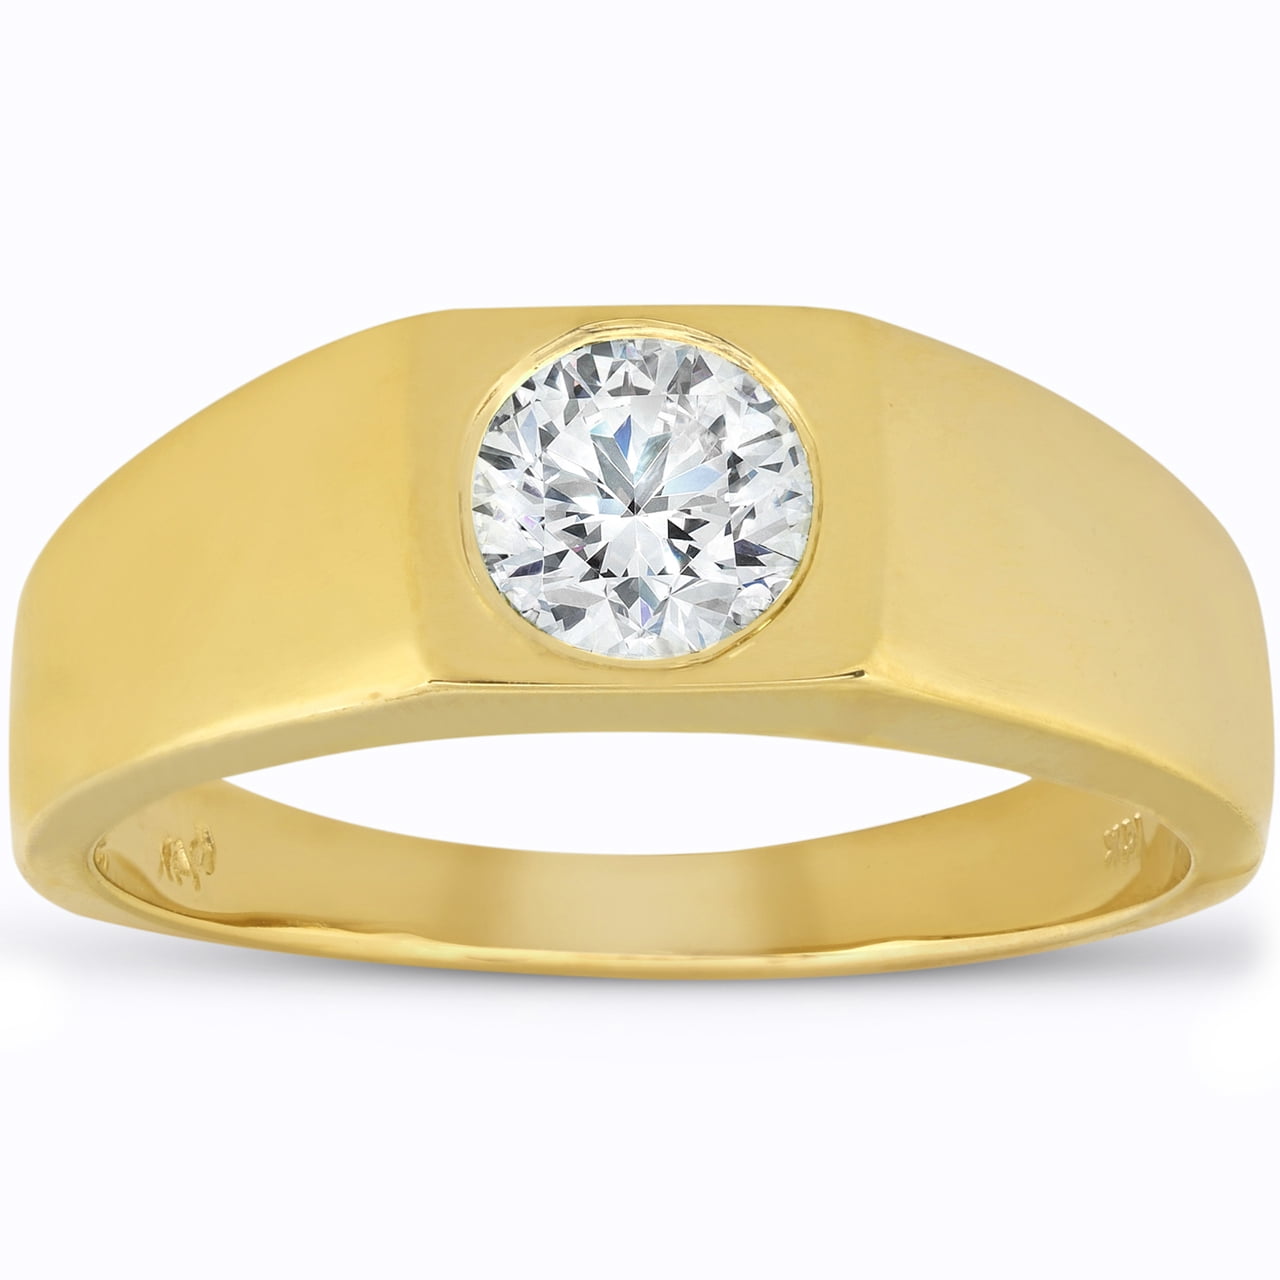 1 Ct Round Cut Diamond Solitaire Men'S Engagement Ring 14K Yellow Gold Finish 